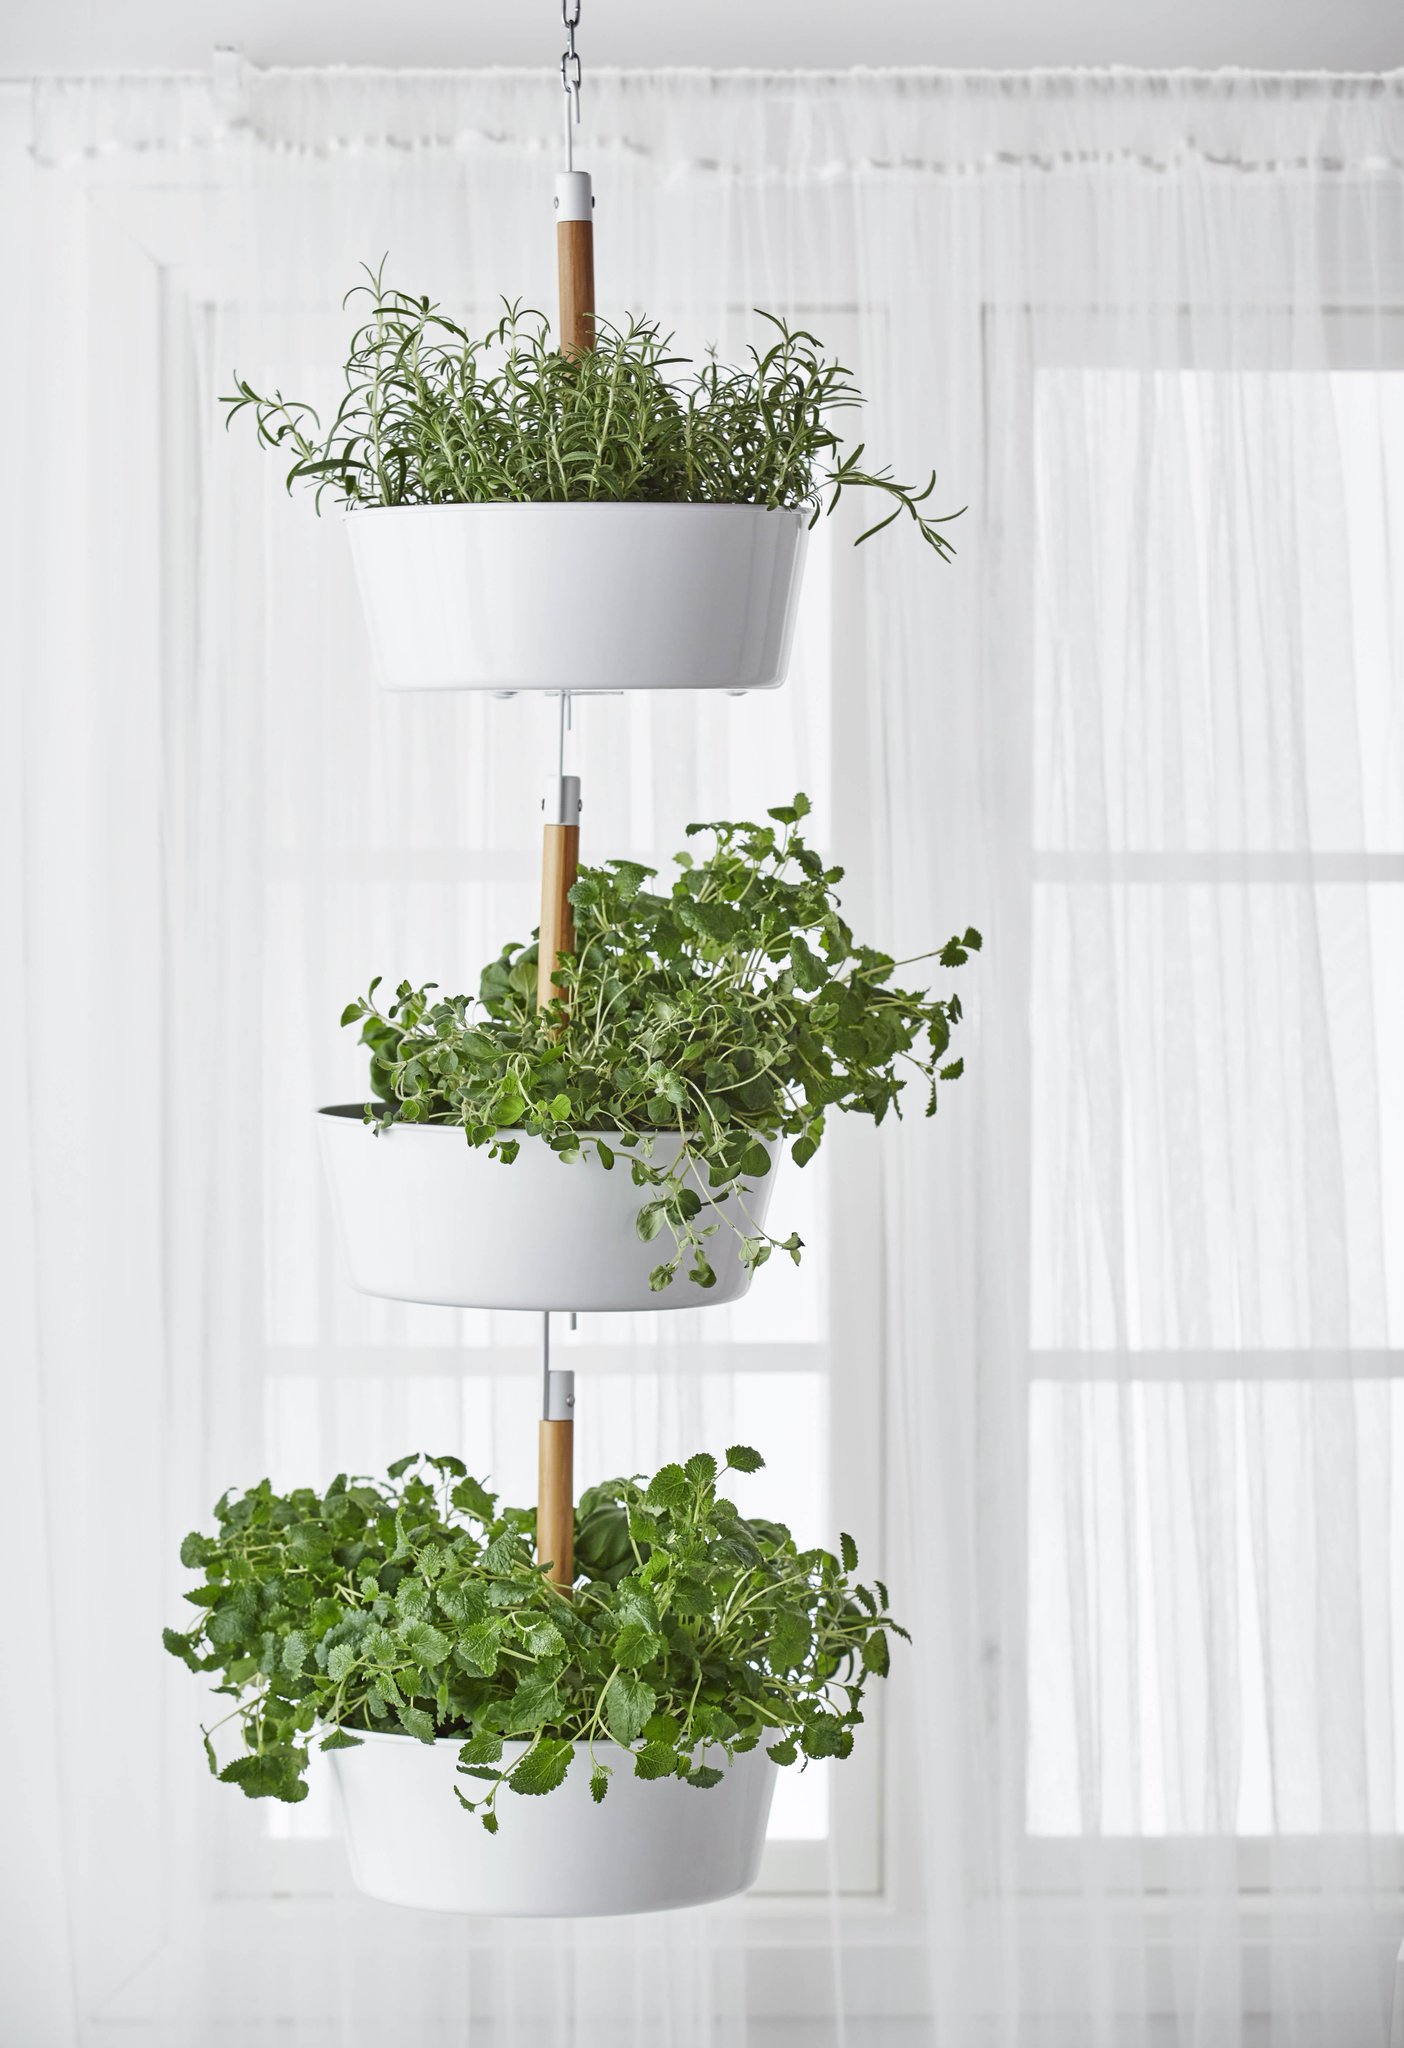 IKEA on "Create a vertical garden for fresh herbs with his BITTERGURKA planter. http://t.co/K6Rv99i4KI / Twitter